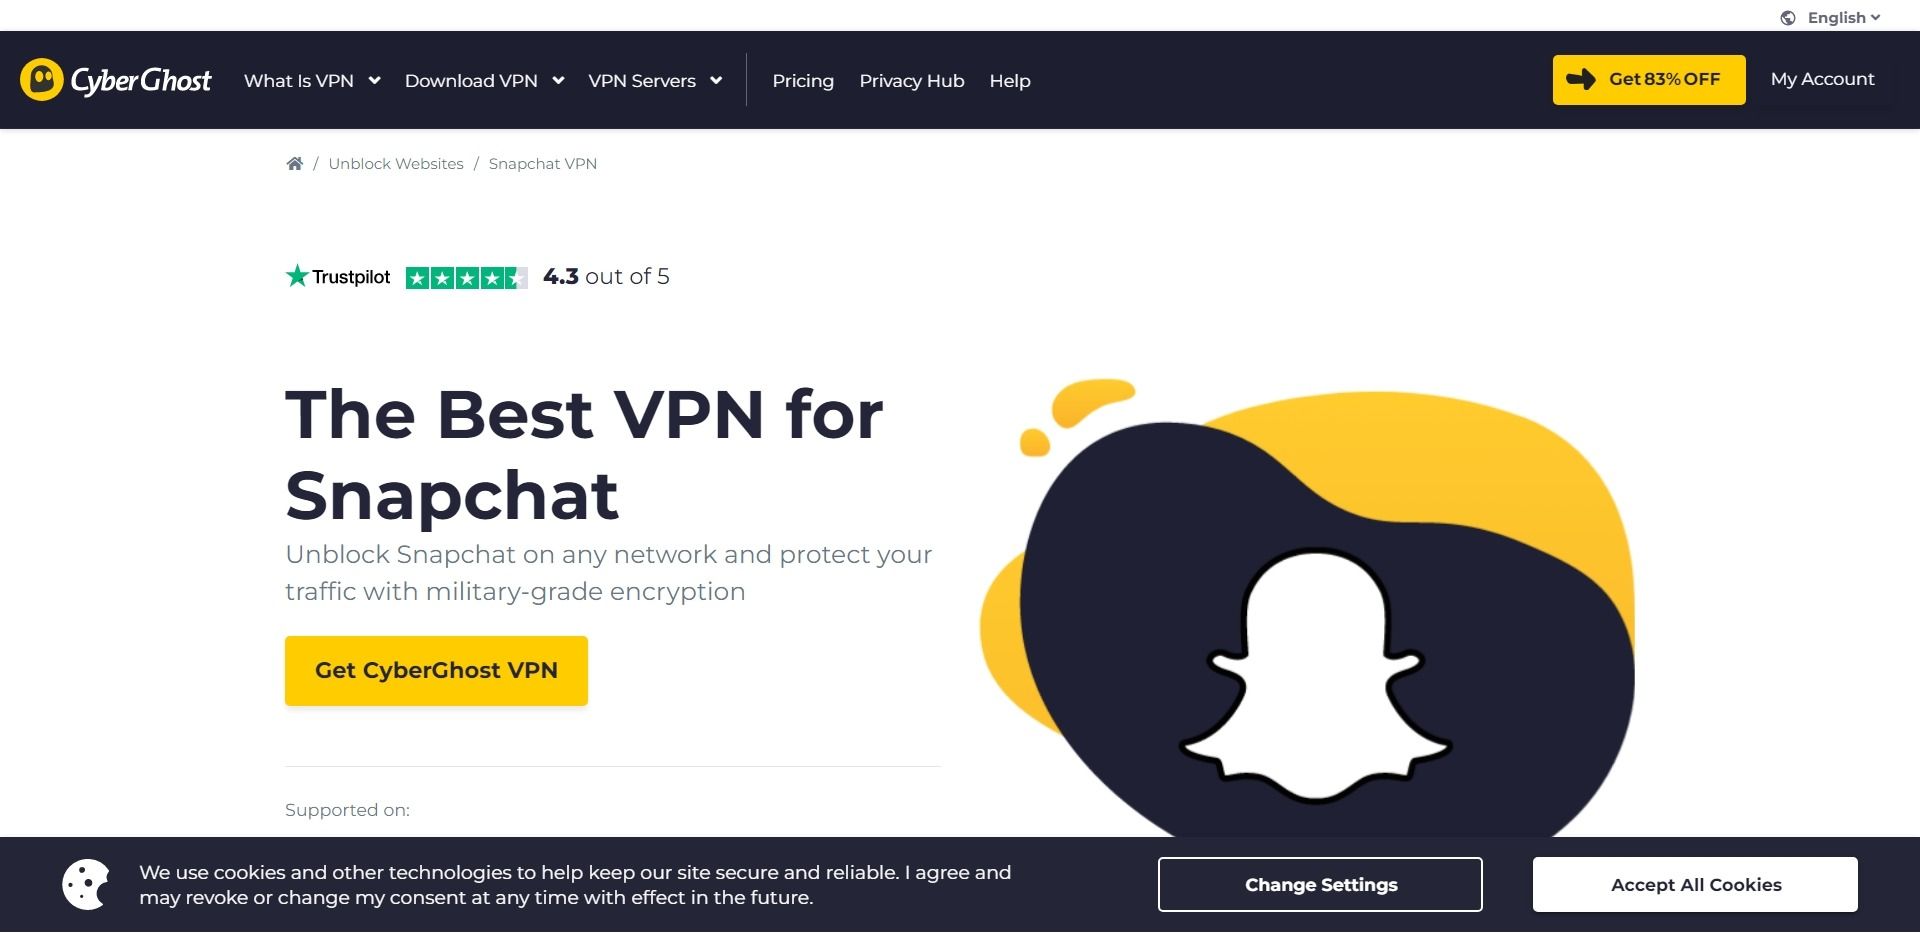 CyberGhost Snapchat VPN page